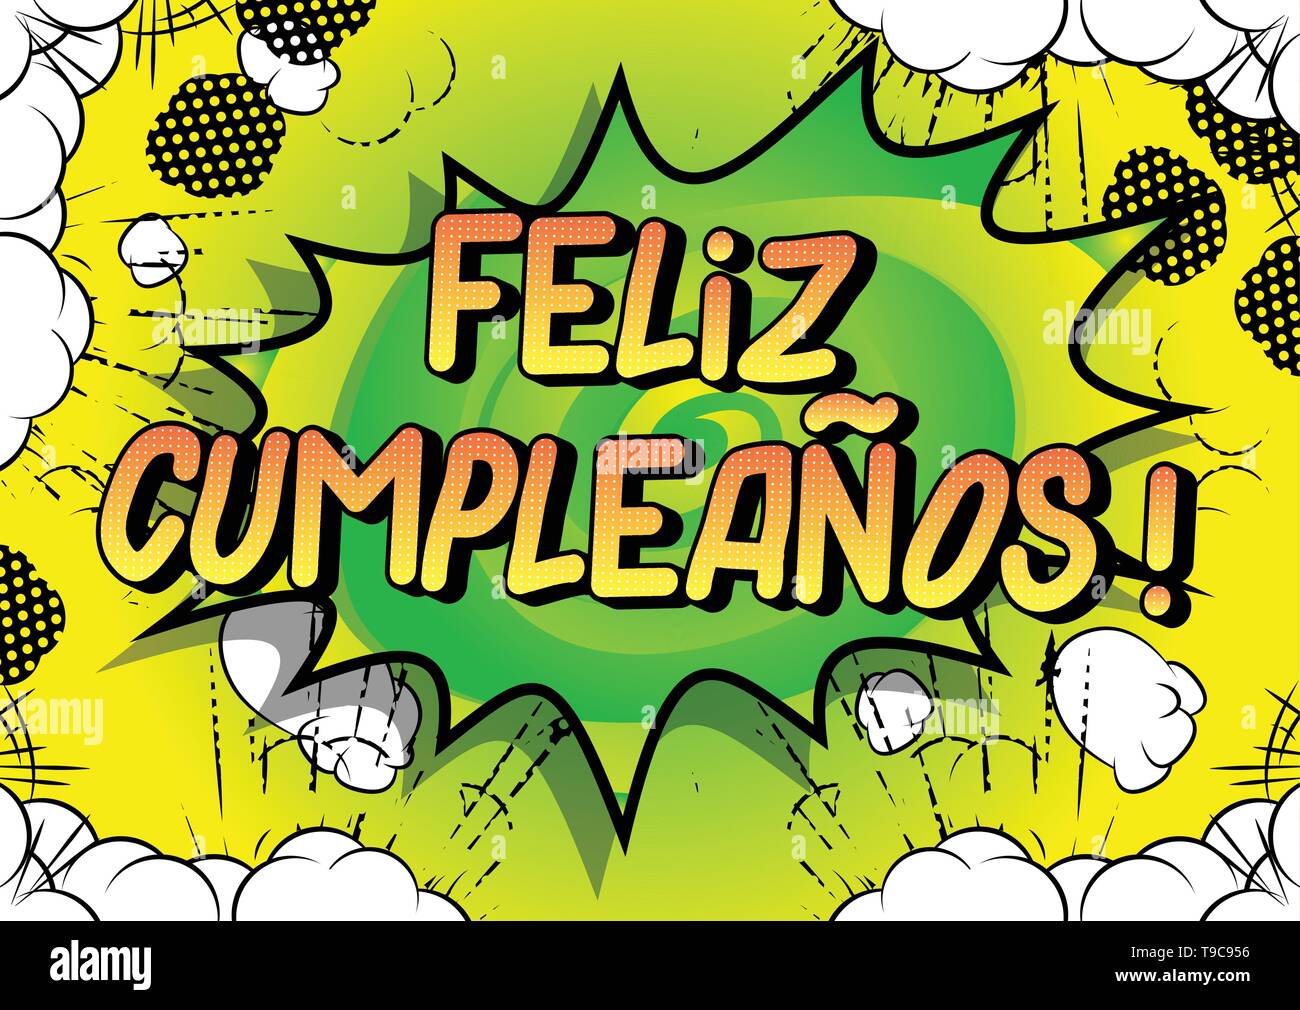 Feliz Cumpleanos Joyeux Anniversaire En Espagnol Vector Illustration Comic Book Style Phrase Image Vectorielle Stock Alamy